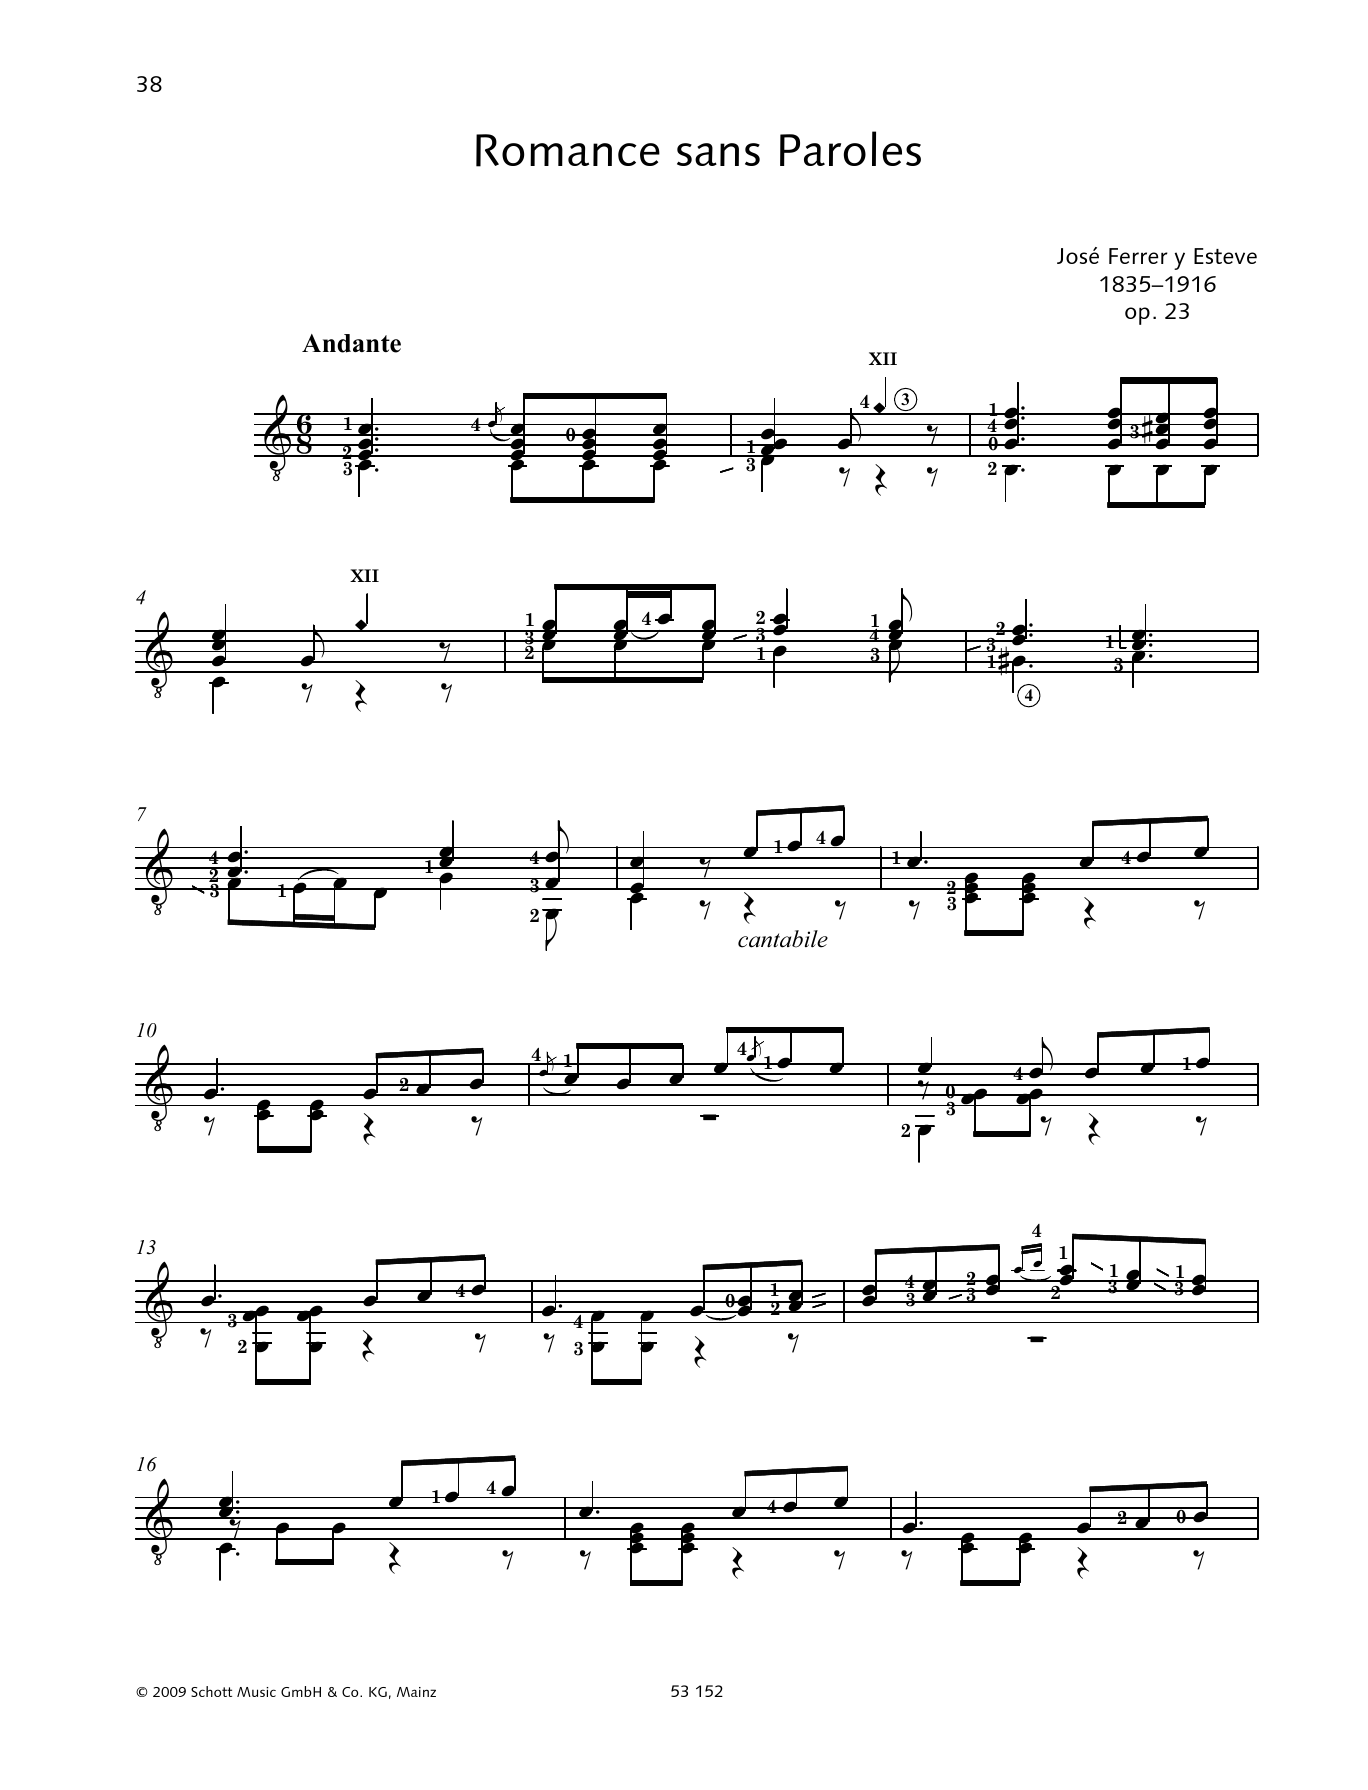 Jose Ferrer Romance sans Paroles Sheet Music Notes & Chords for Solo Guitar - Download or Print PDF